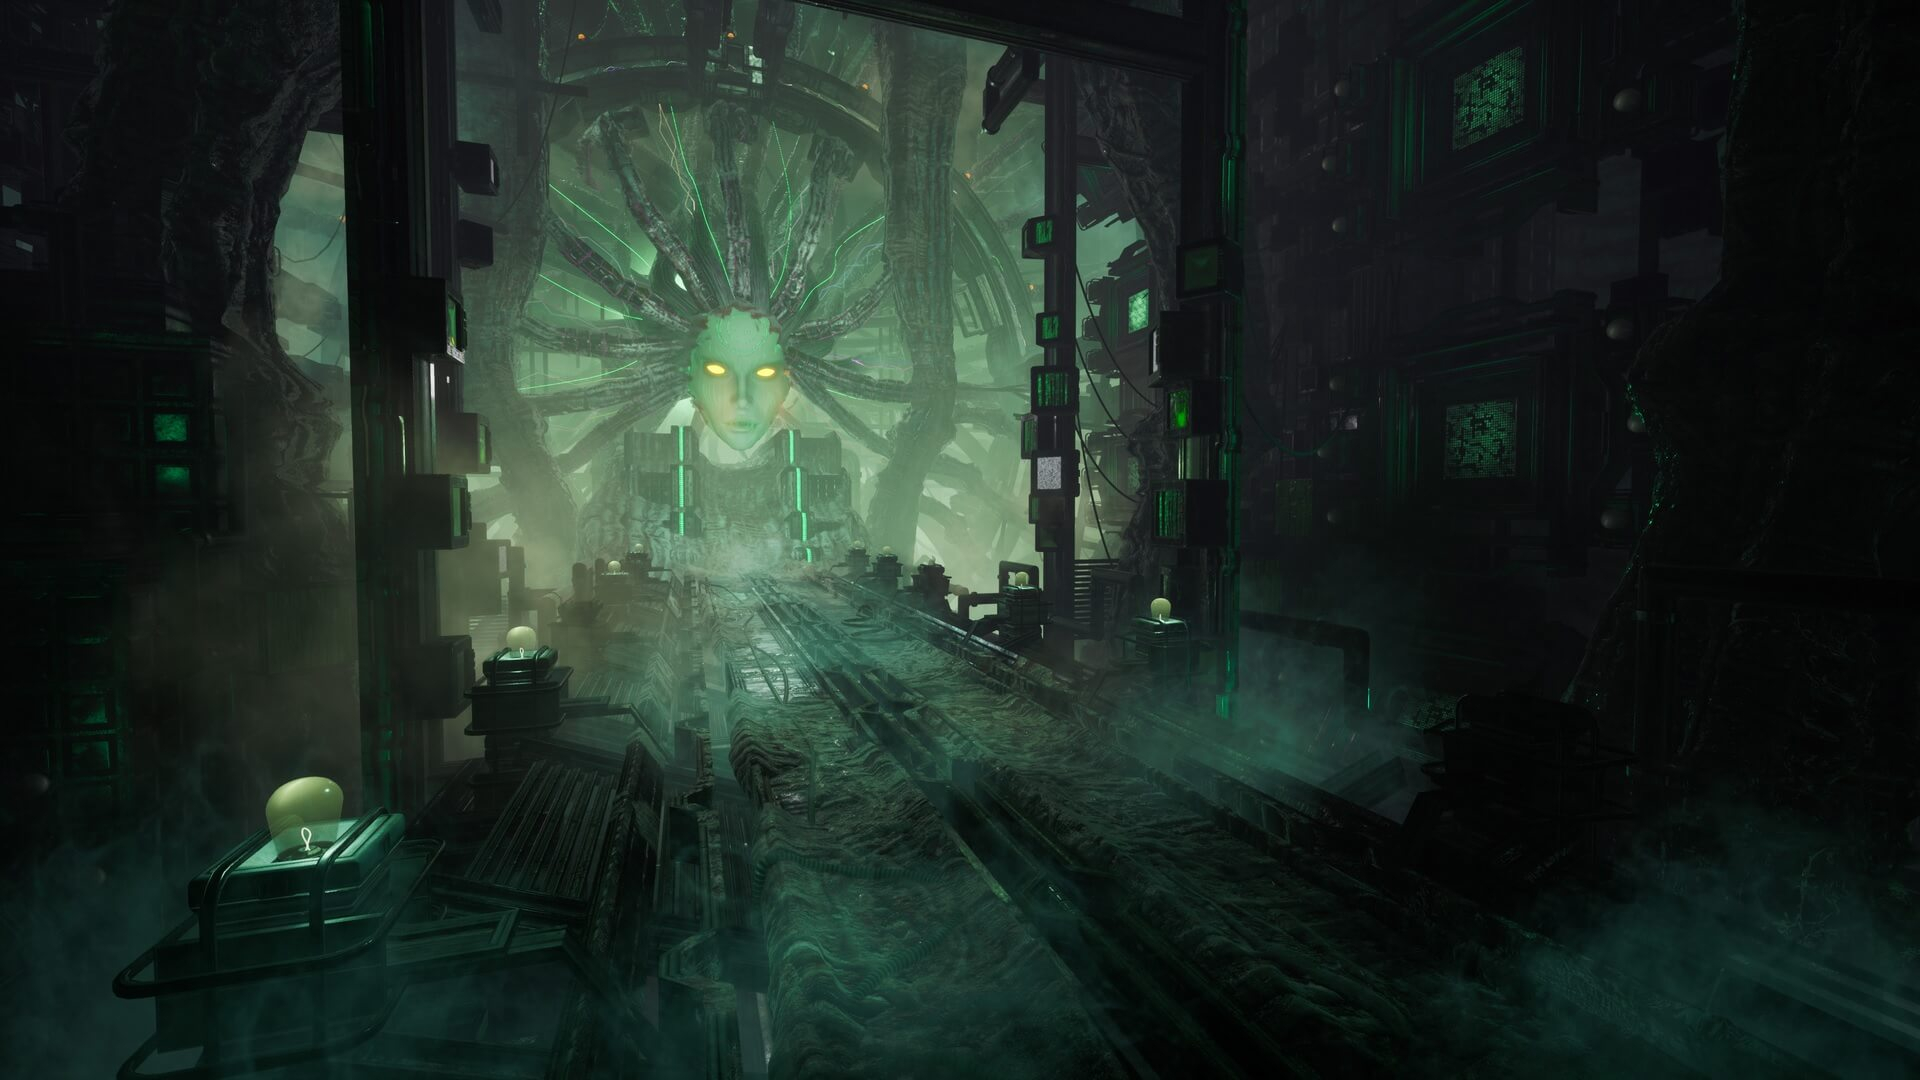 1920x1080 Sledgehammer Games' environment artist creates a beautiful System Shock 2-inspired Shodan scene in Unreal Engine 4